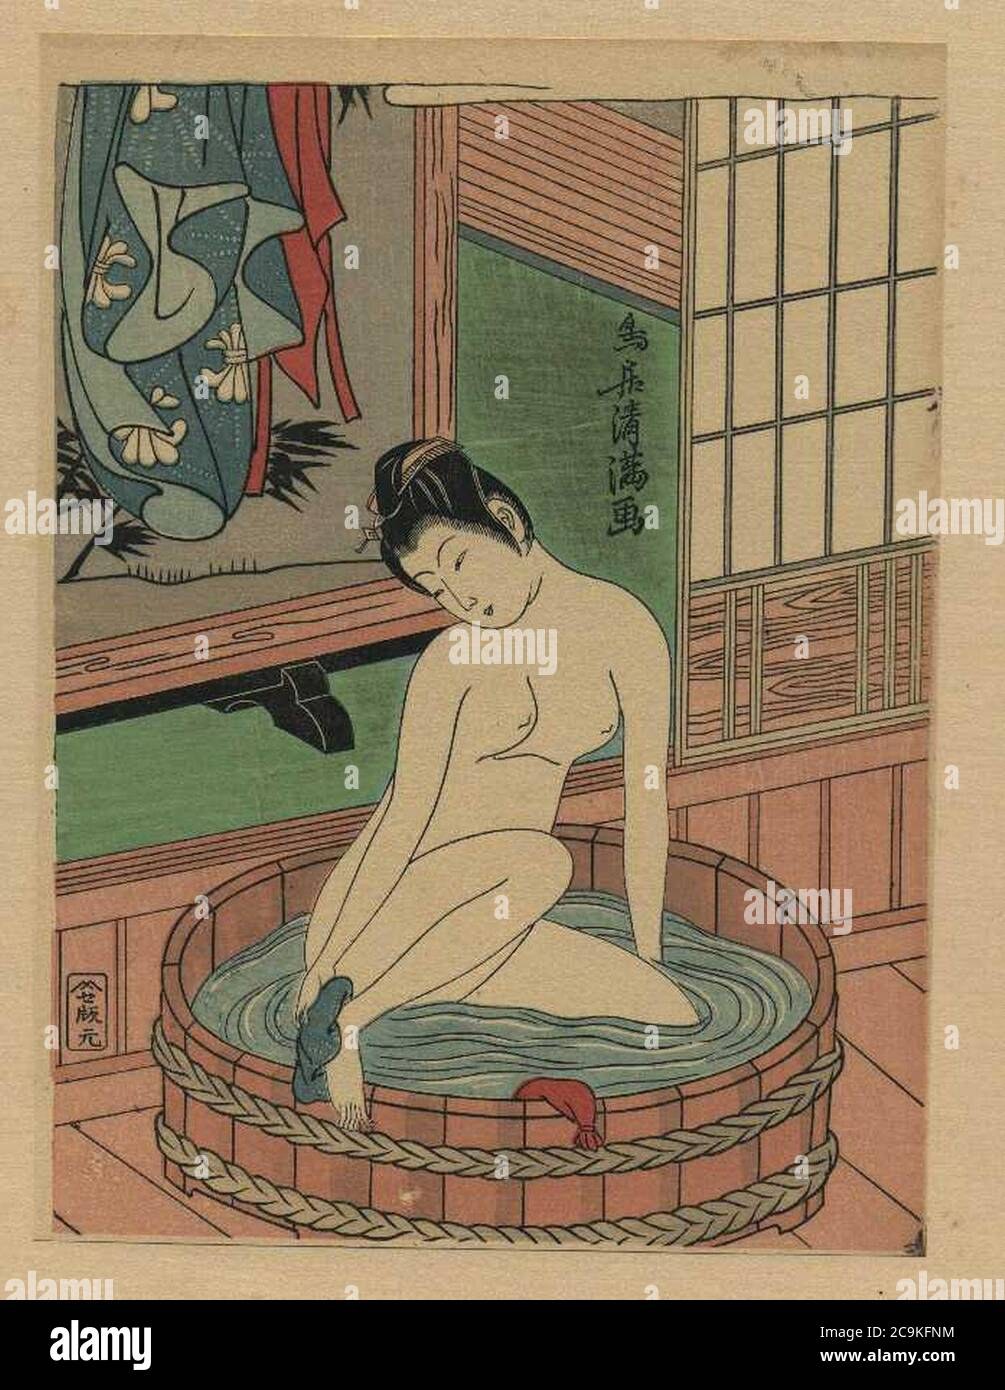 Япония баня порно фото 98